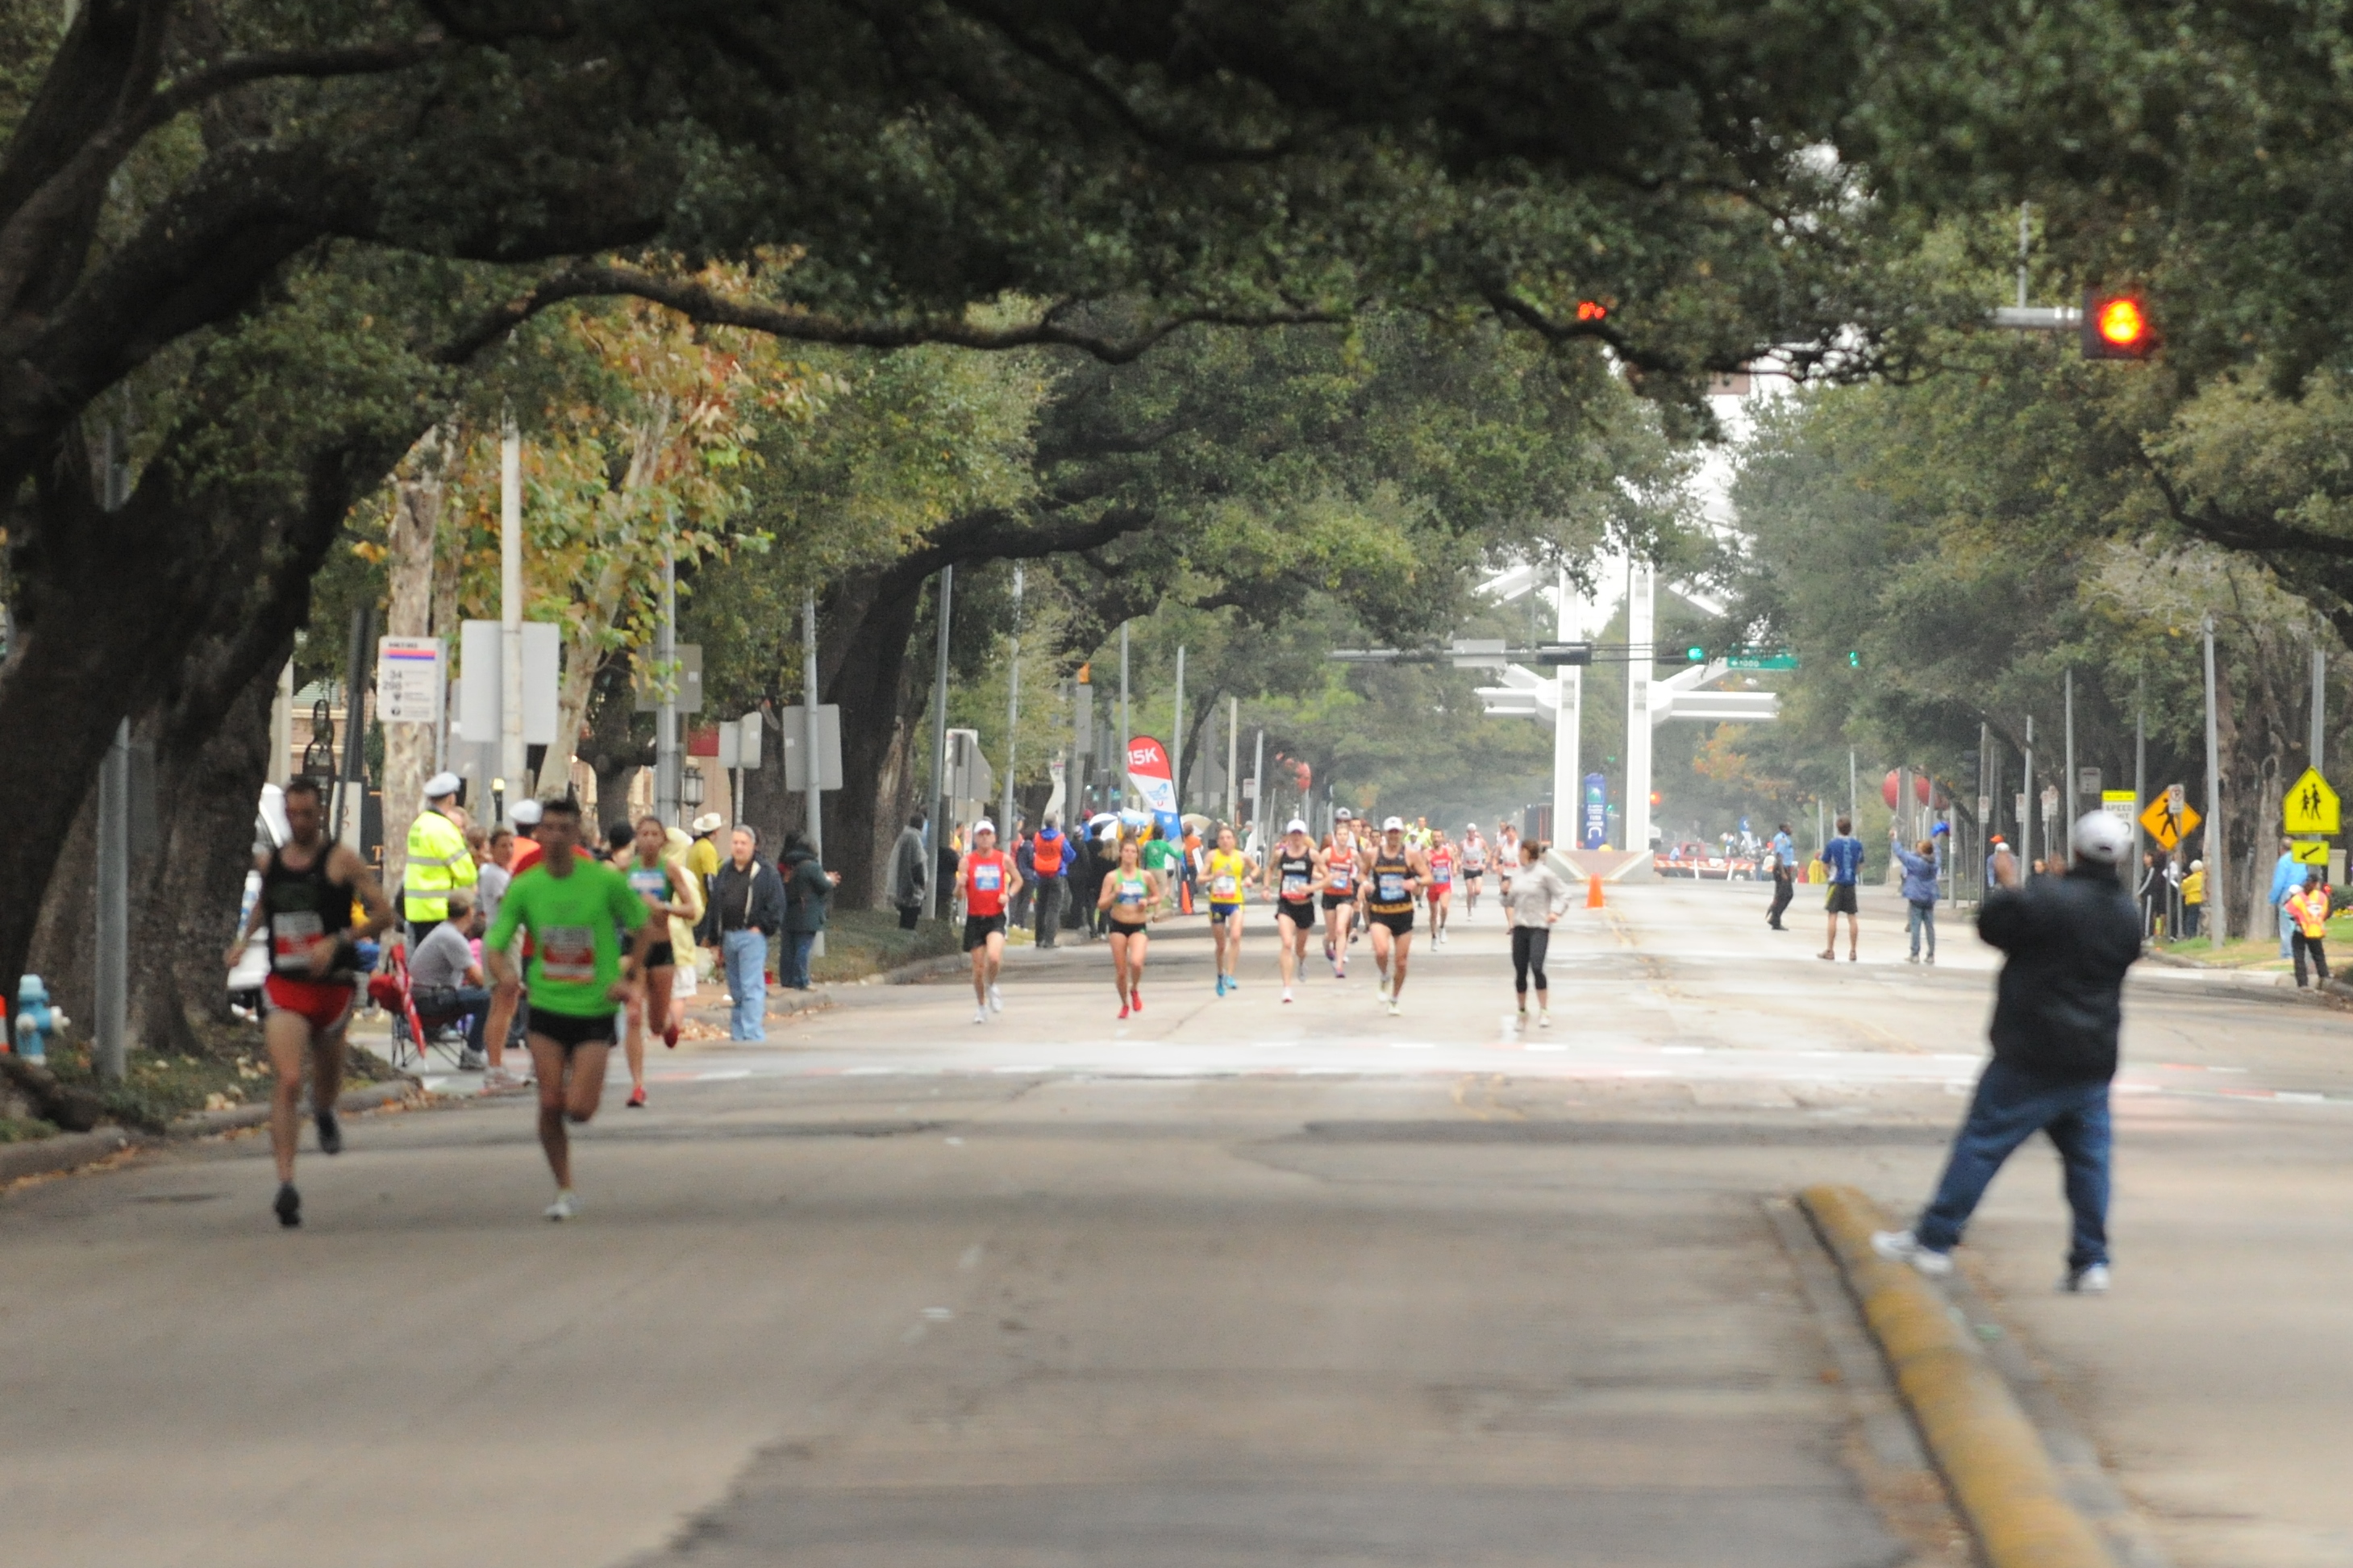 Houston Marathon Adventure Marathon